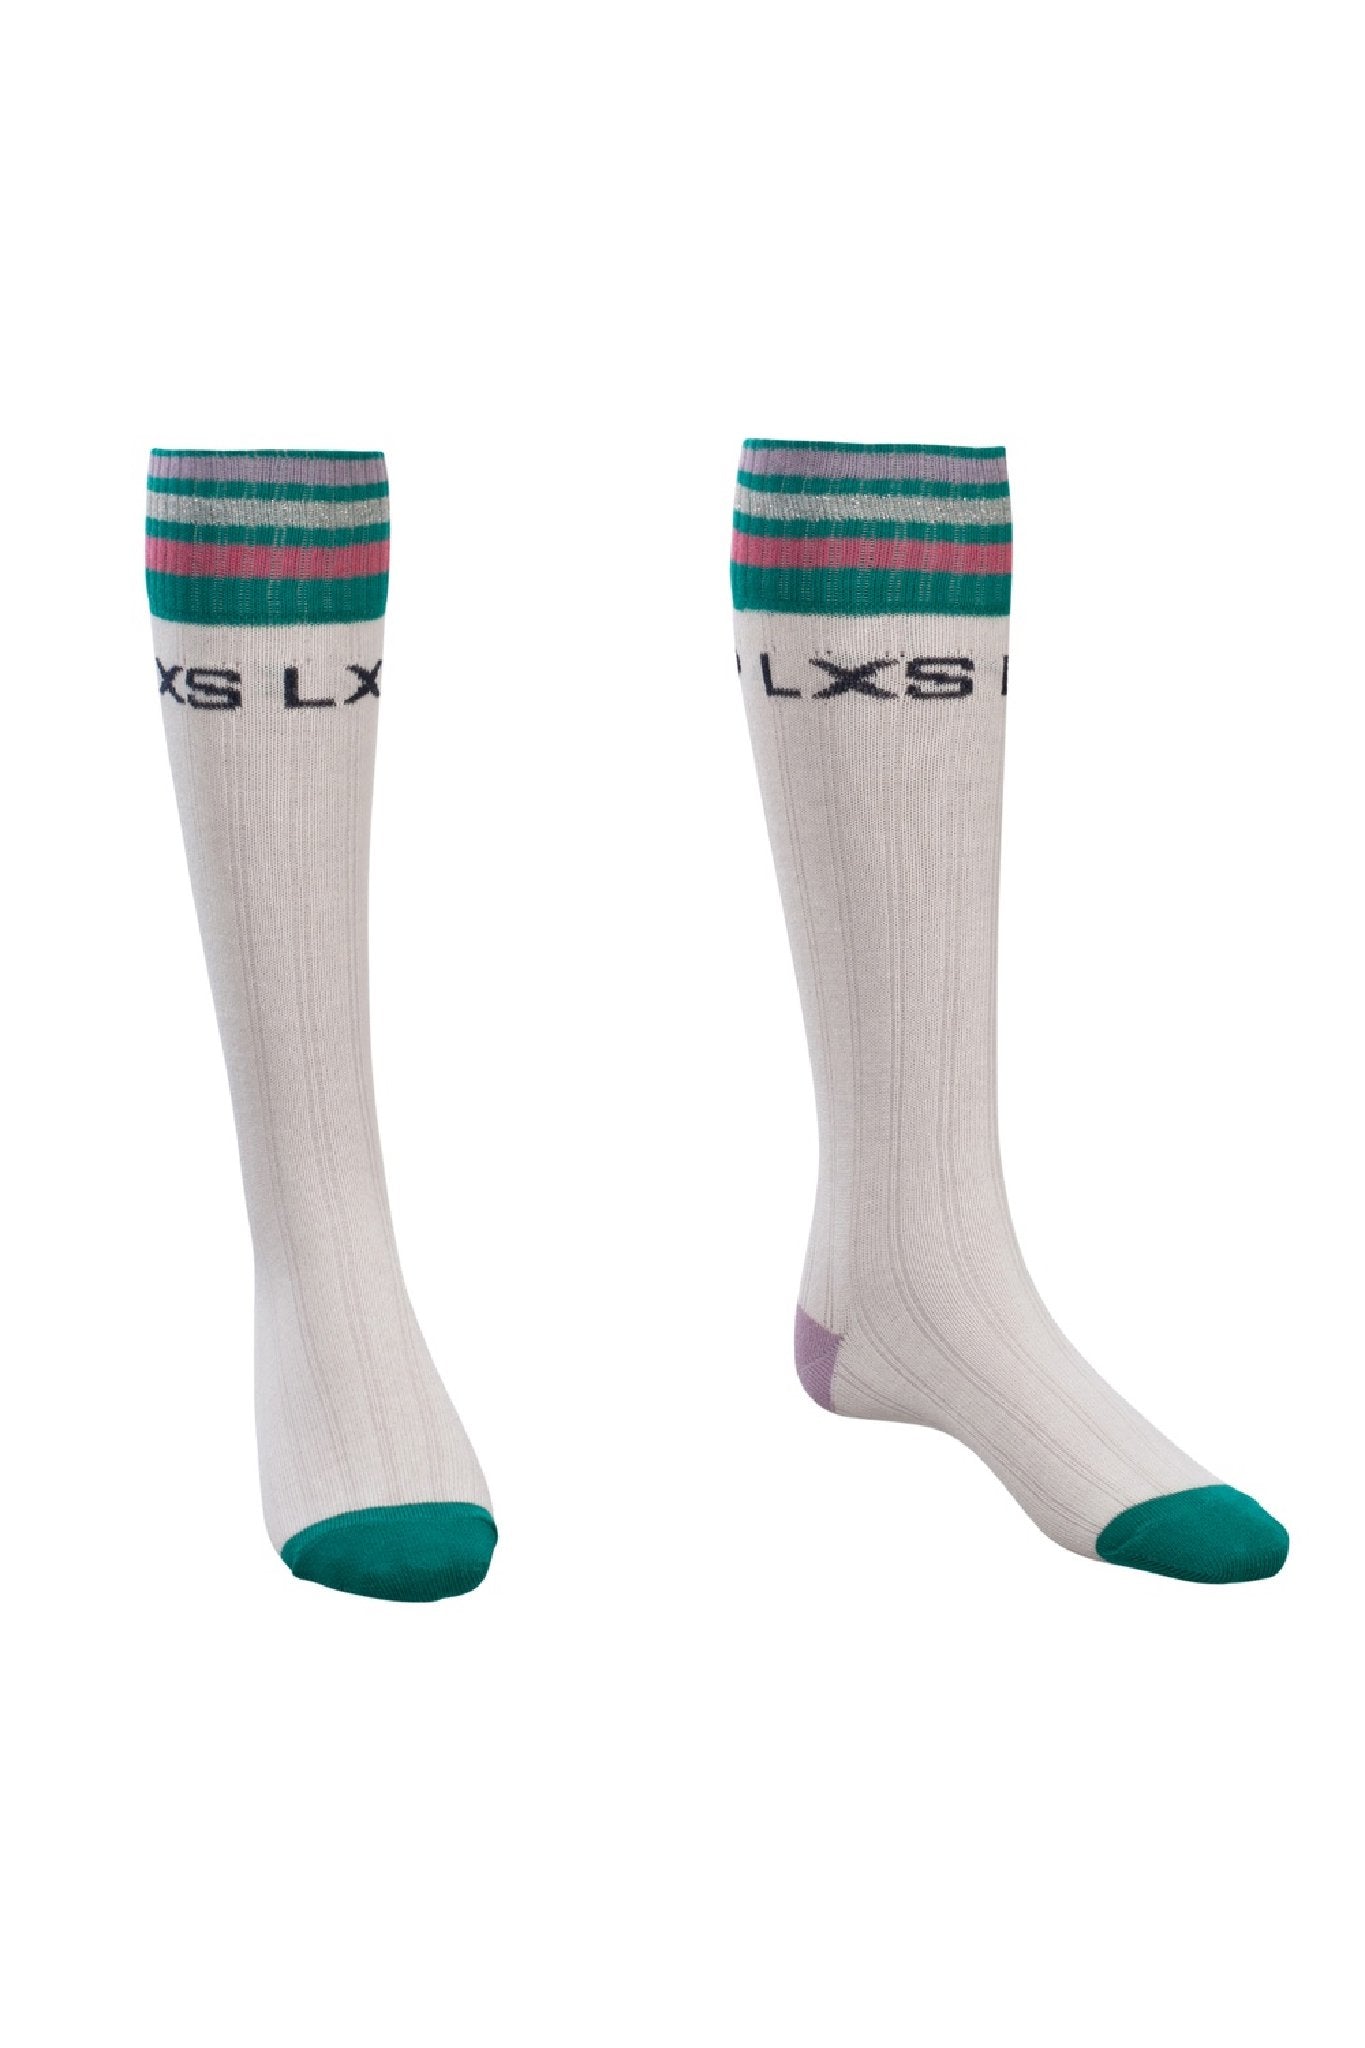 Meisjes Little knee socks van LOOXS Little in de kleur Milkshake in maat 27-30.